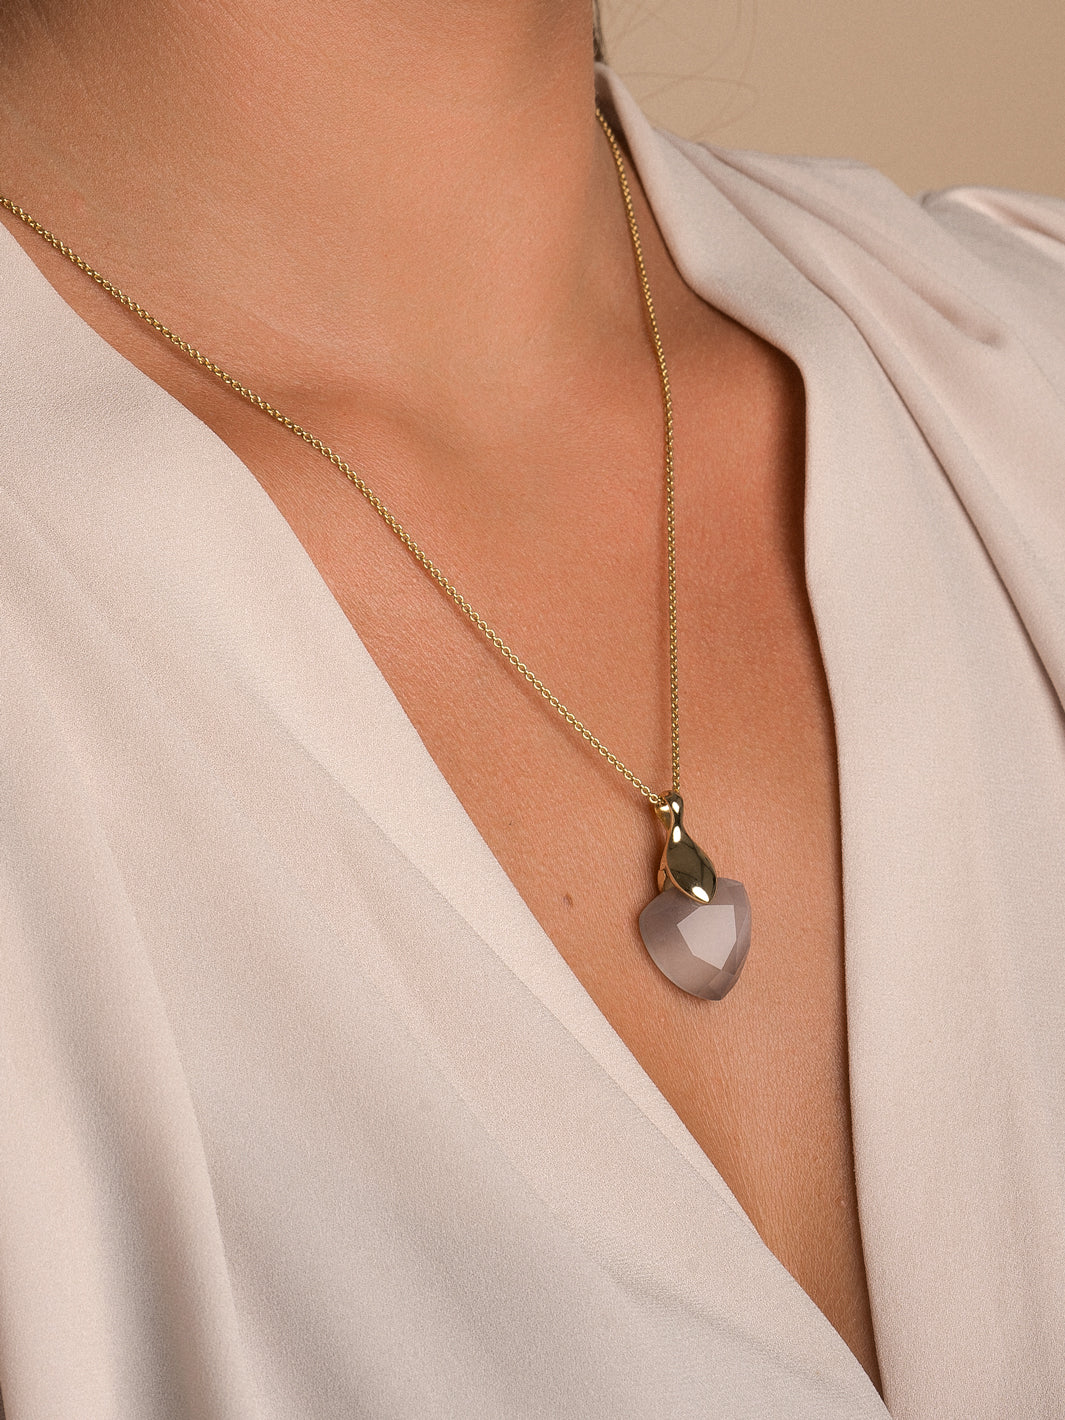 Gray Agate Trillion Cut Necklace Gemstones